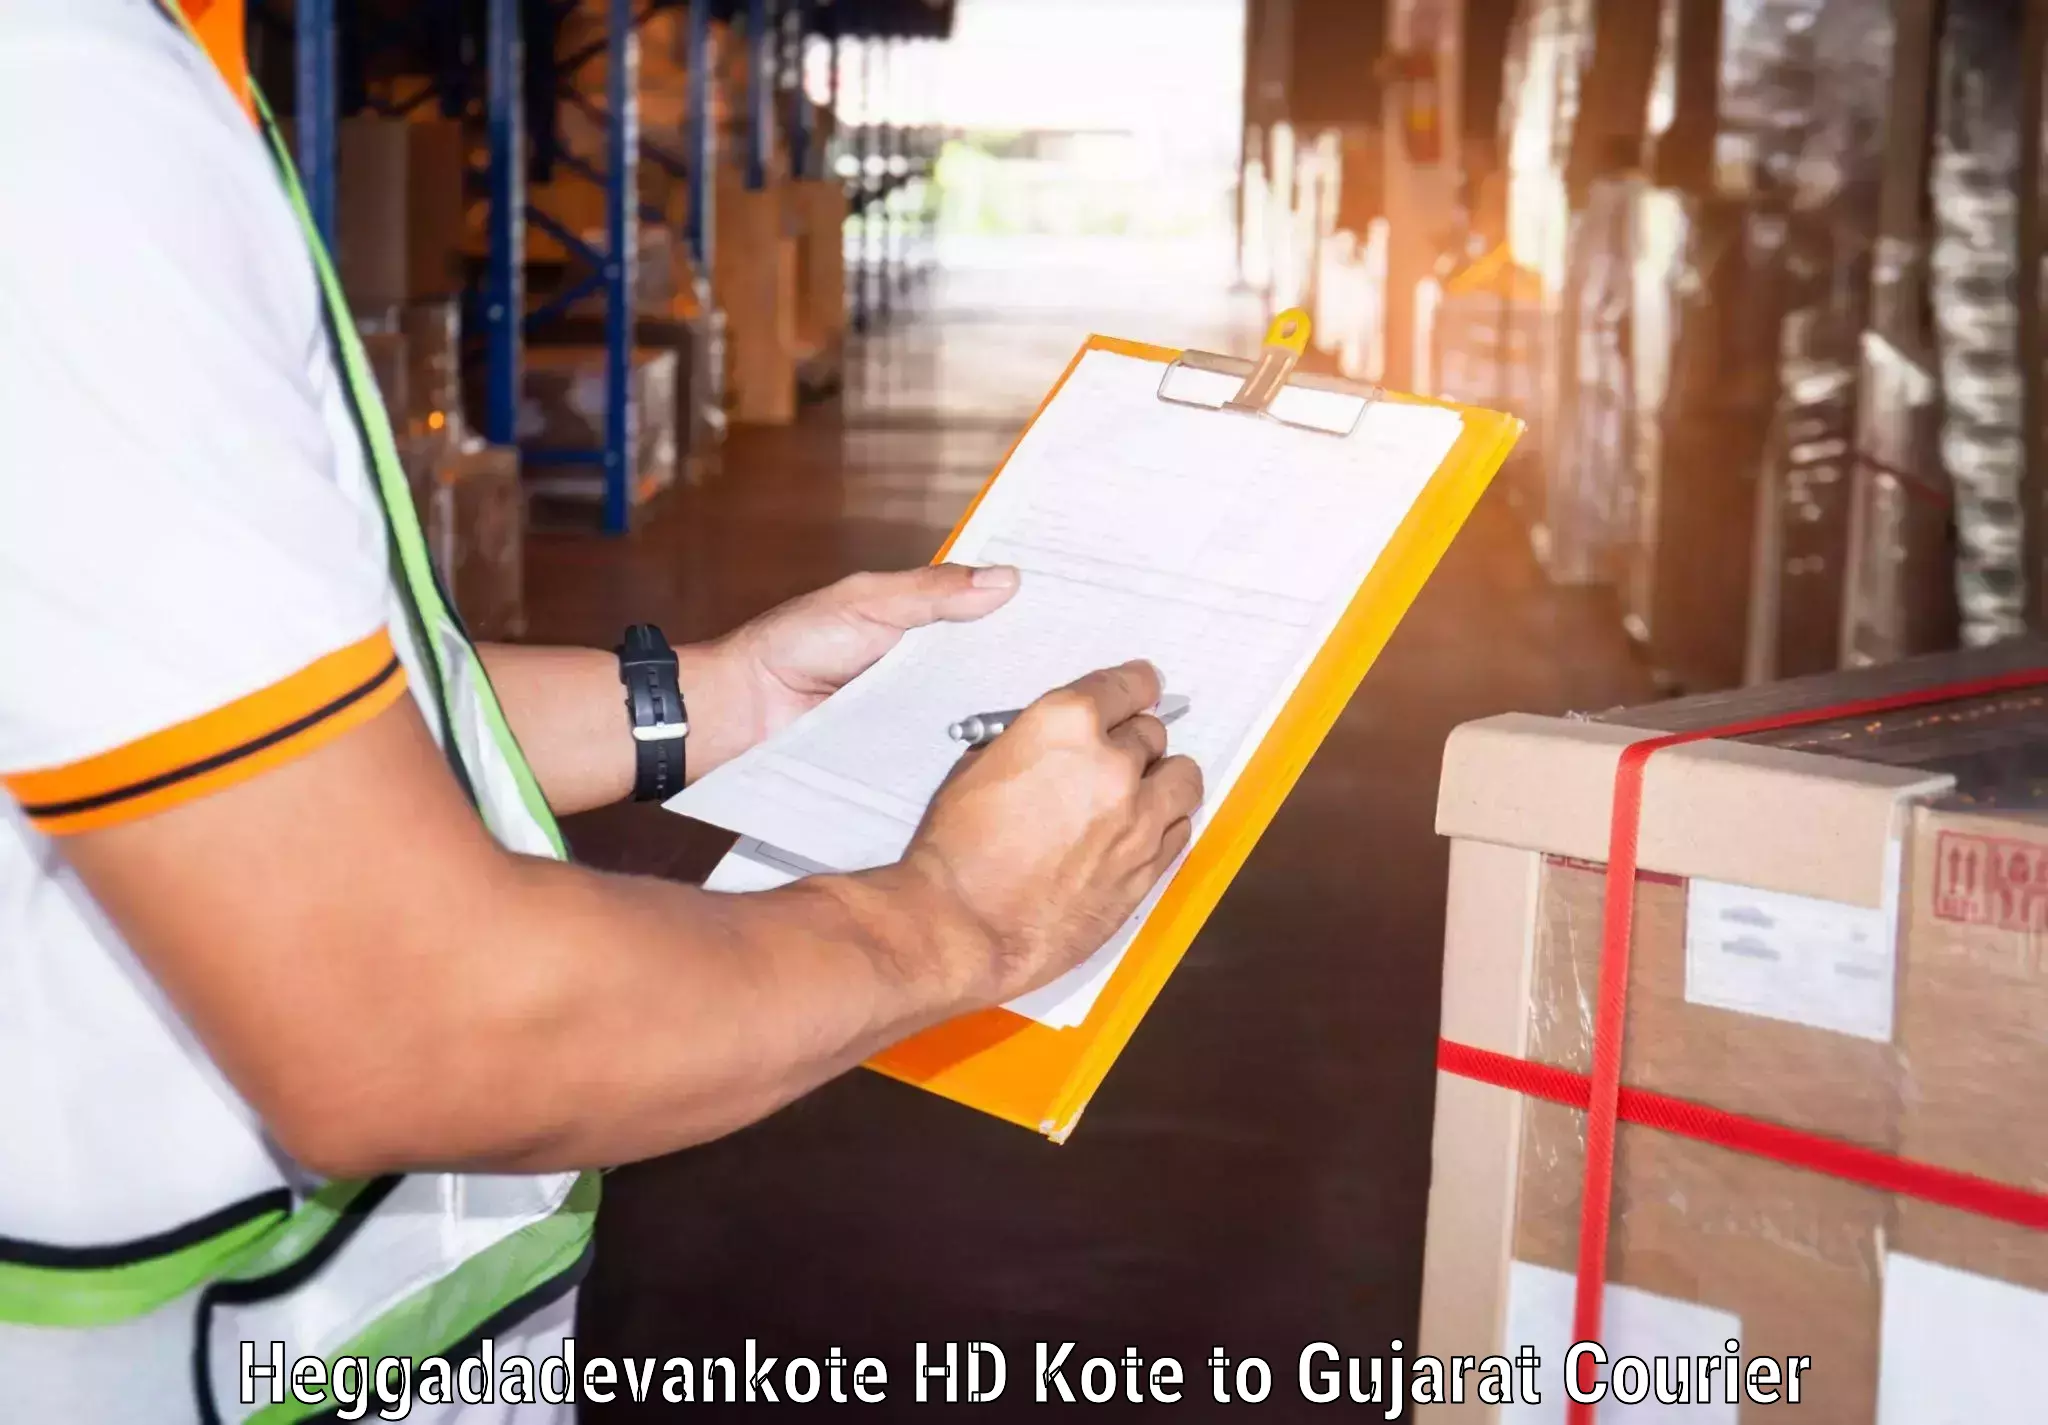 Package delivery network Heggadadevankote HD Kote to Kachchh